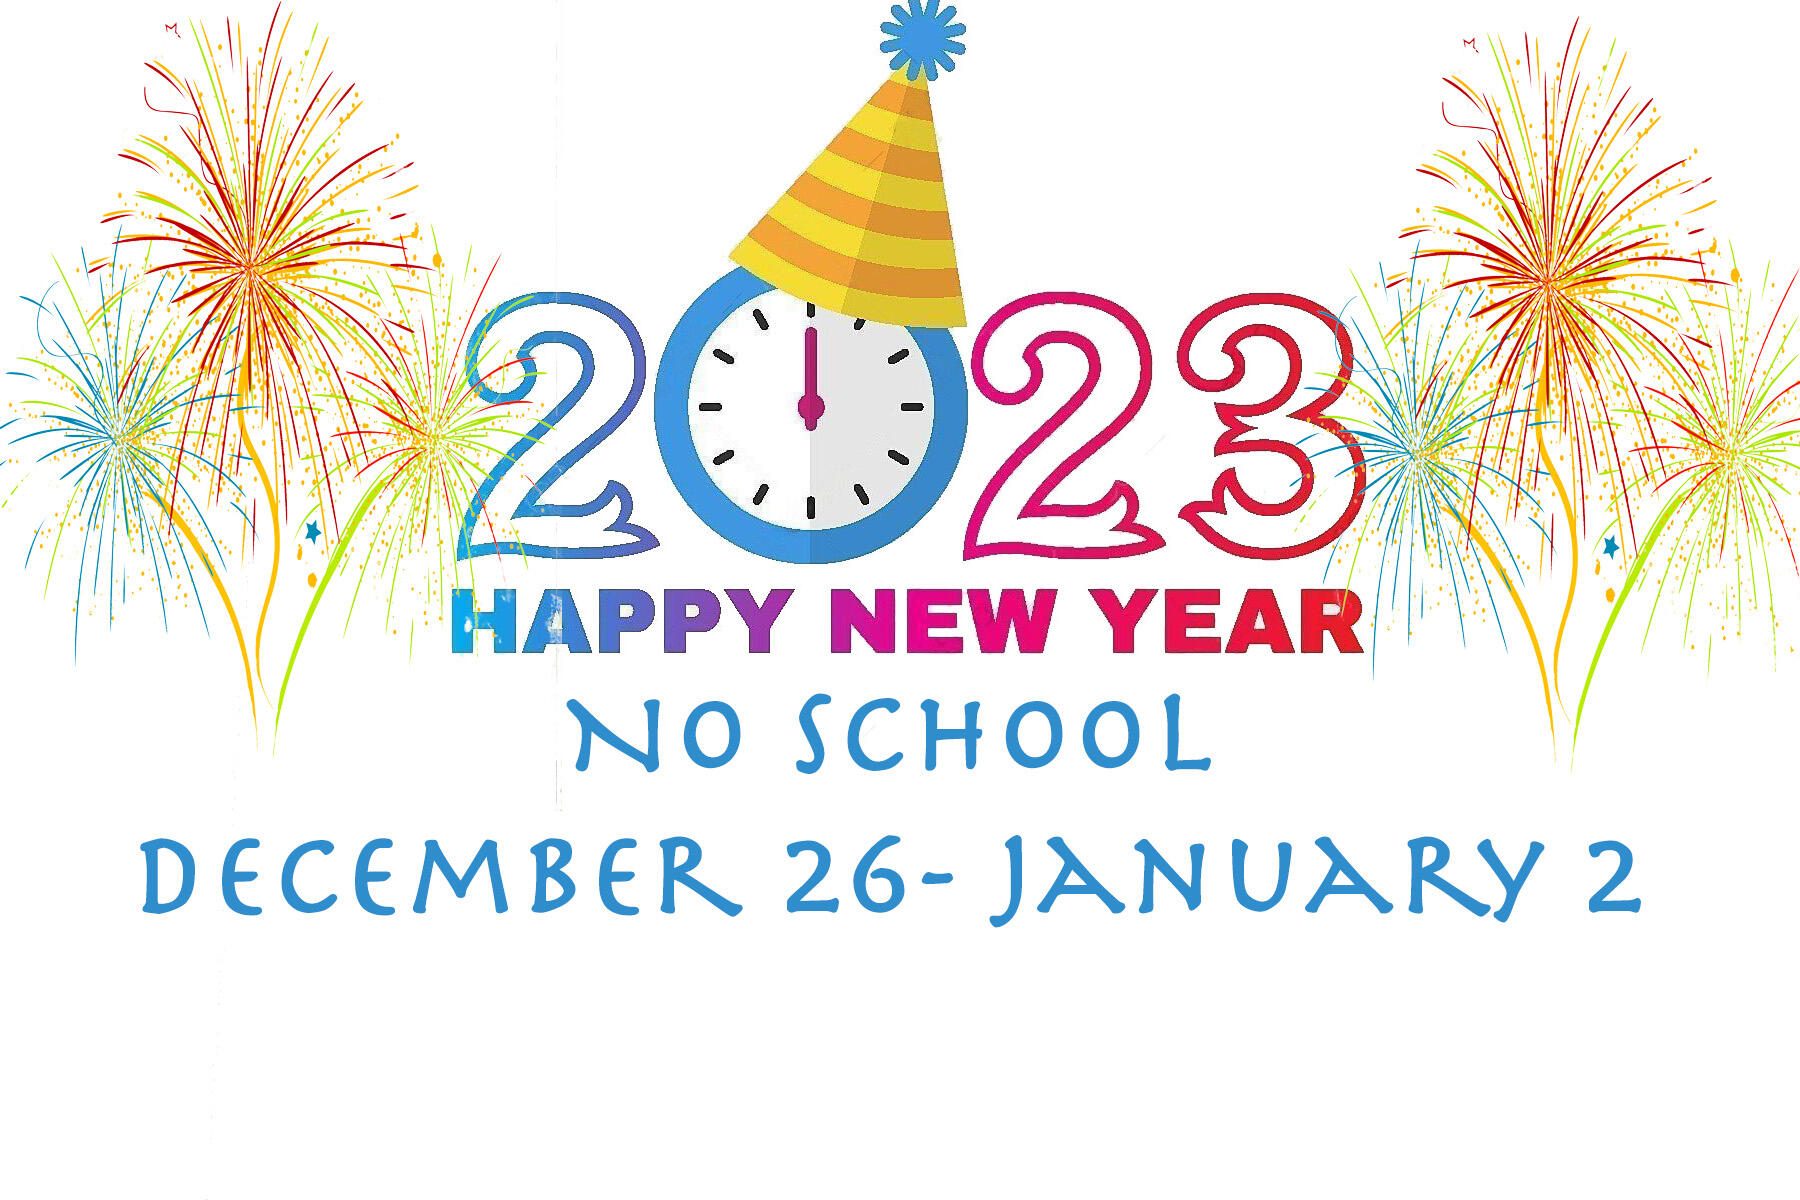 No School December 26 - January 2